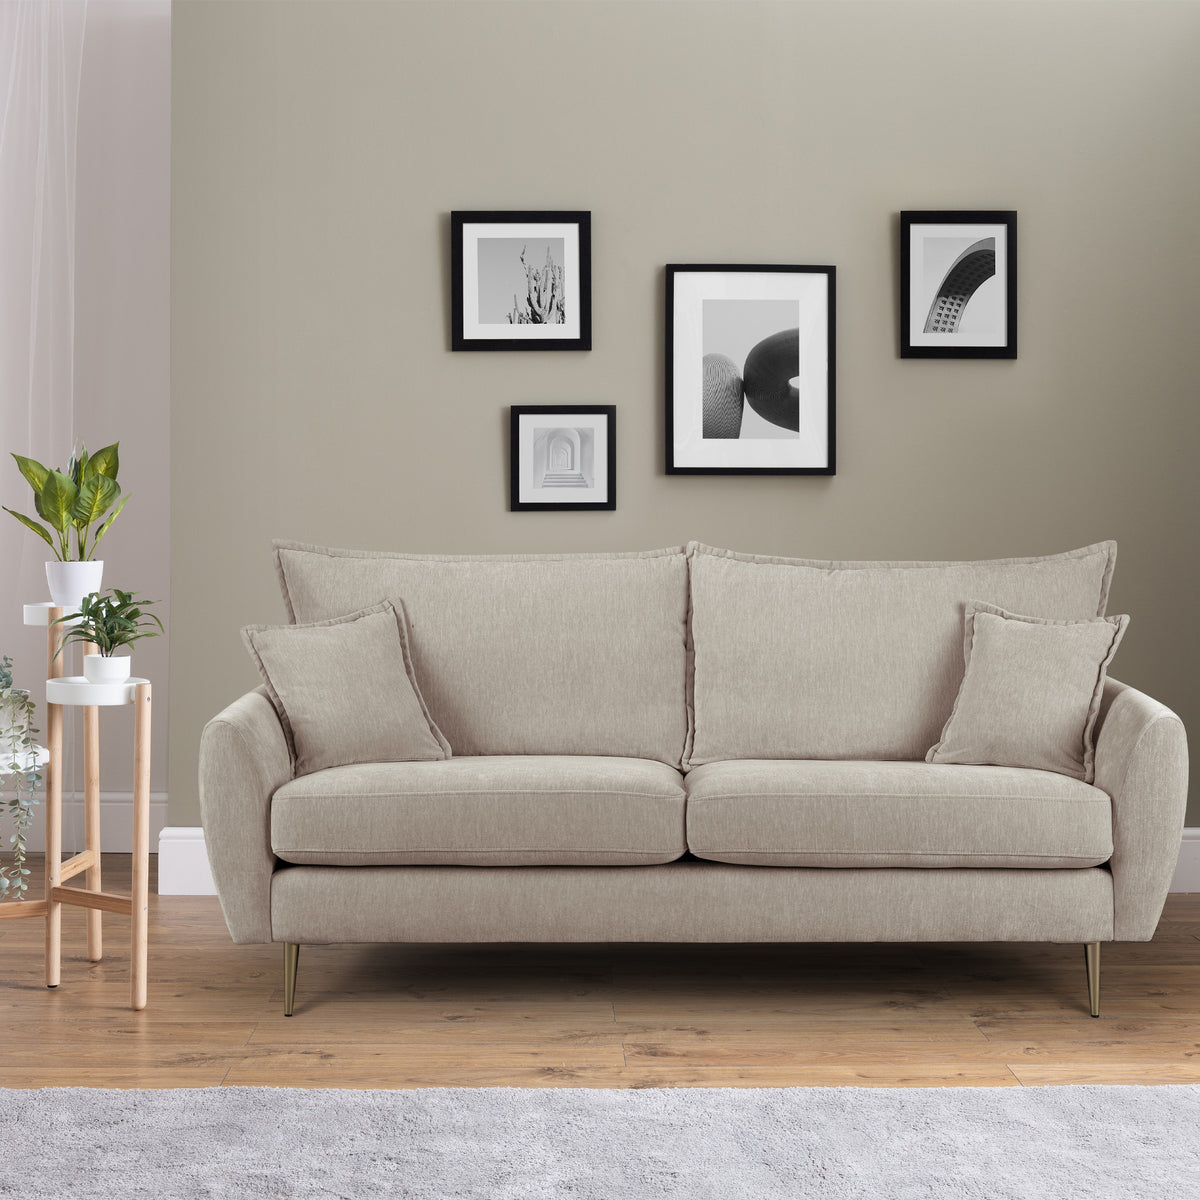 Evelyn Mink 3 Seater Sofa for living room